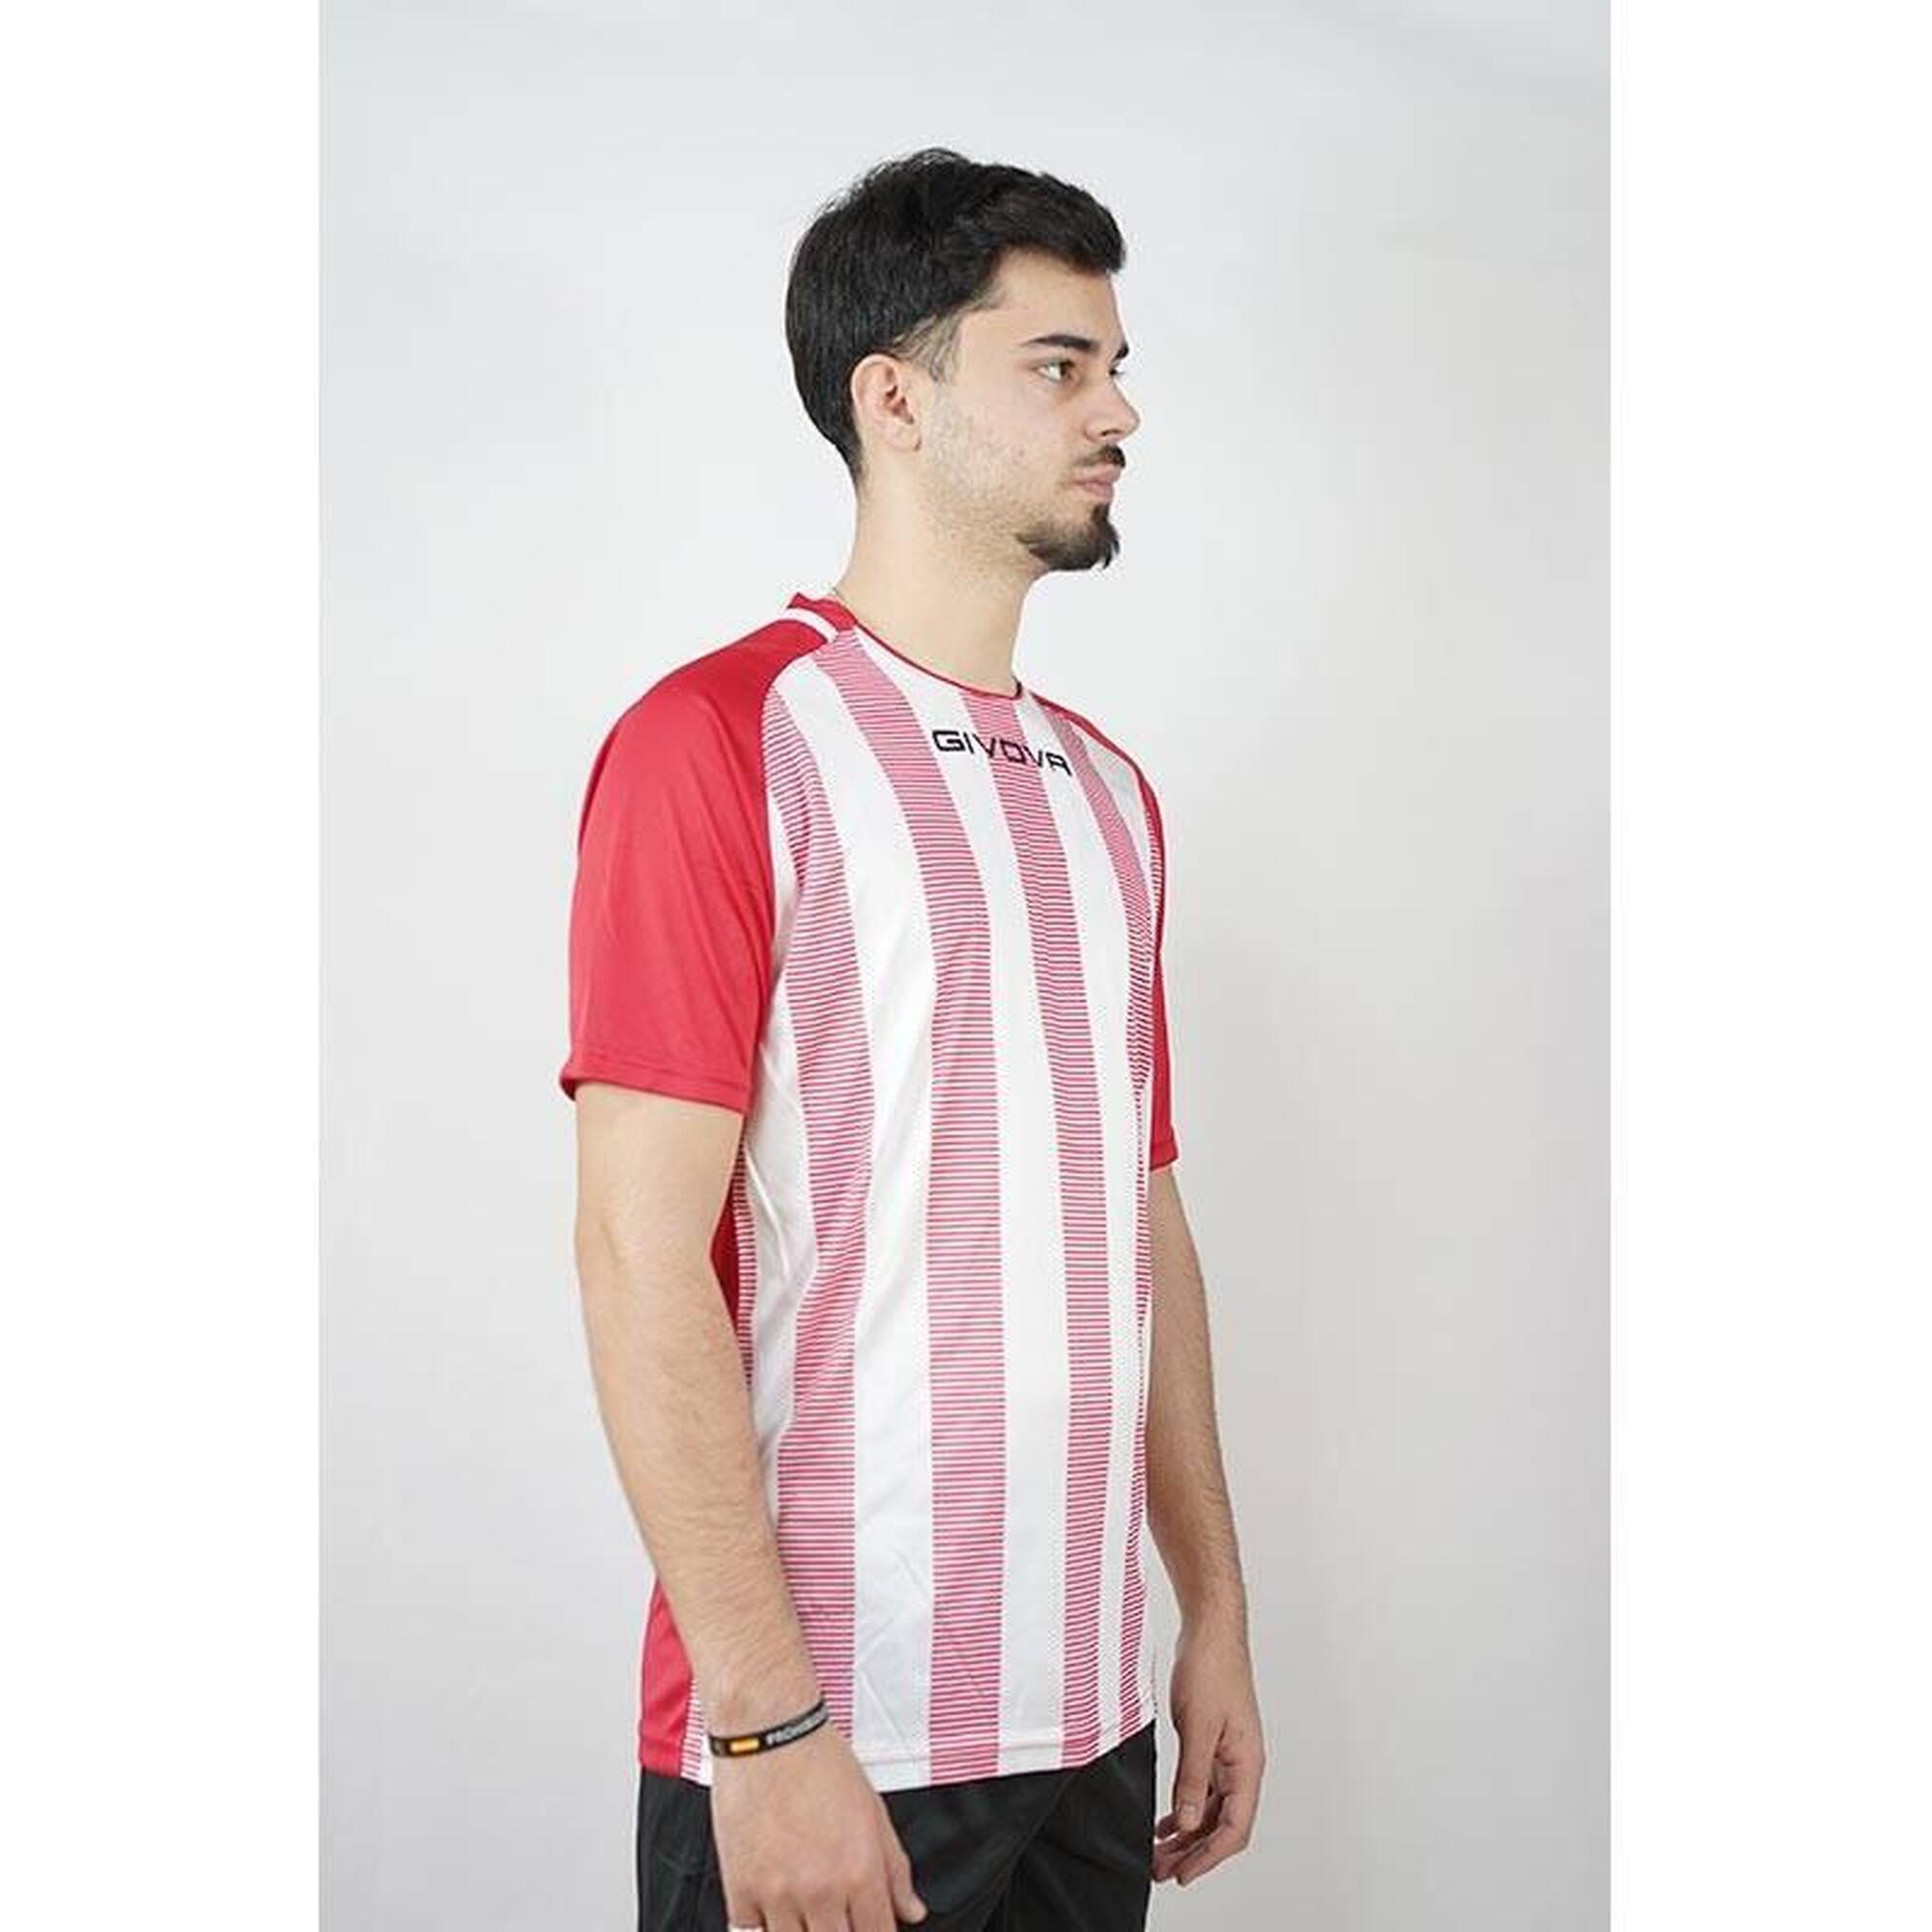 Camiseta de Fútbol Givova Tratto Rojo/Blanco Poliéster